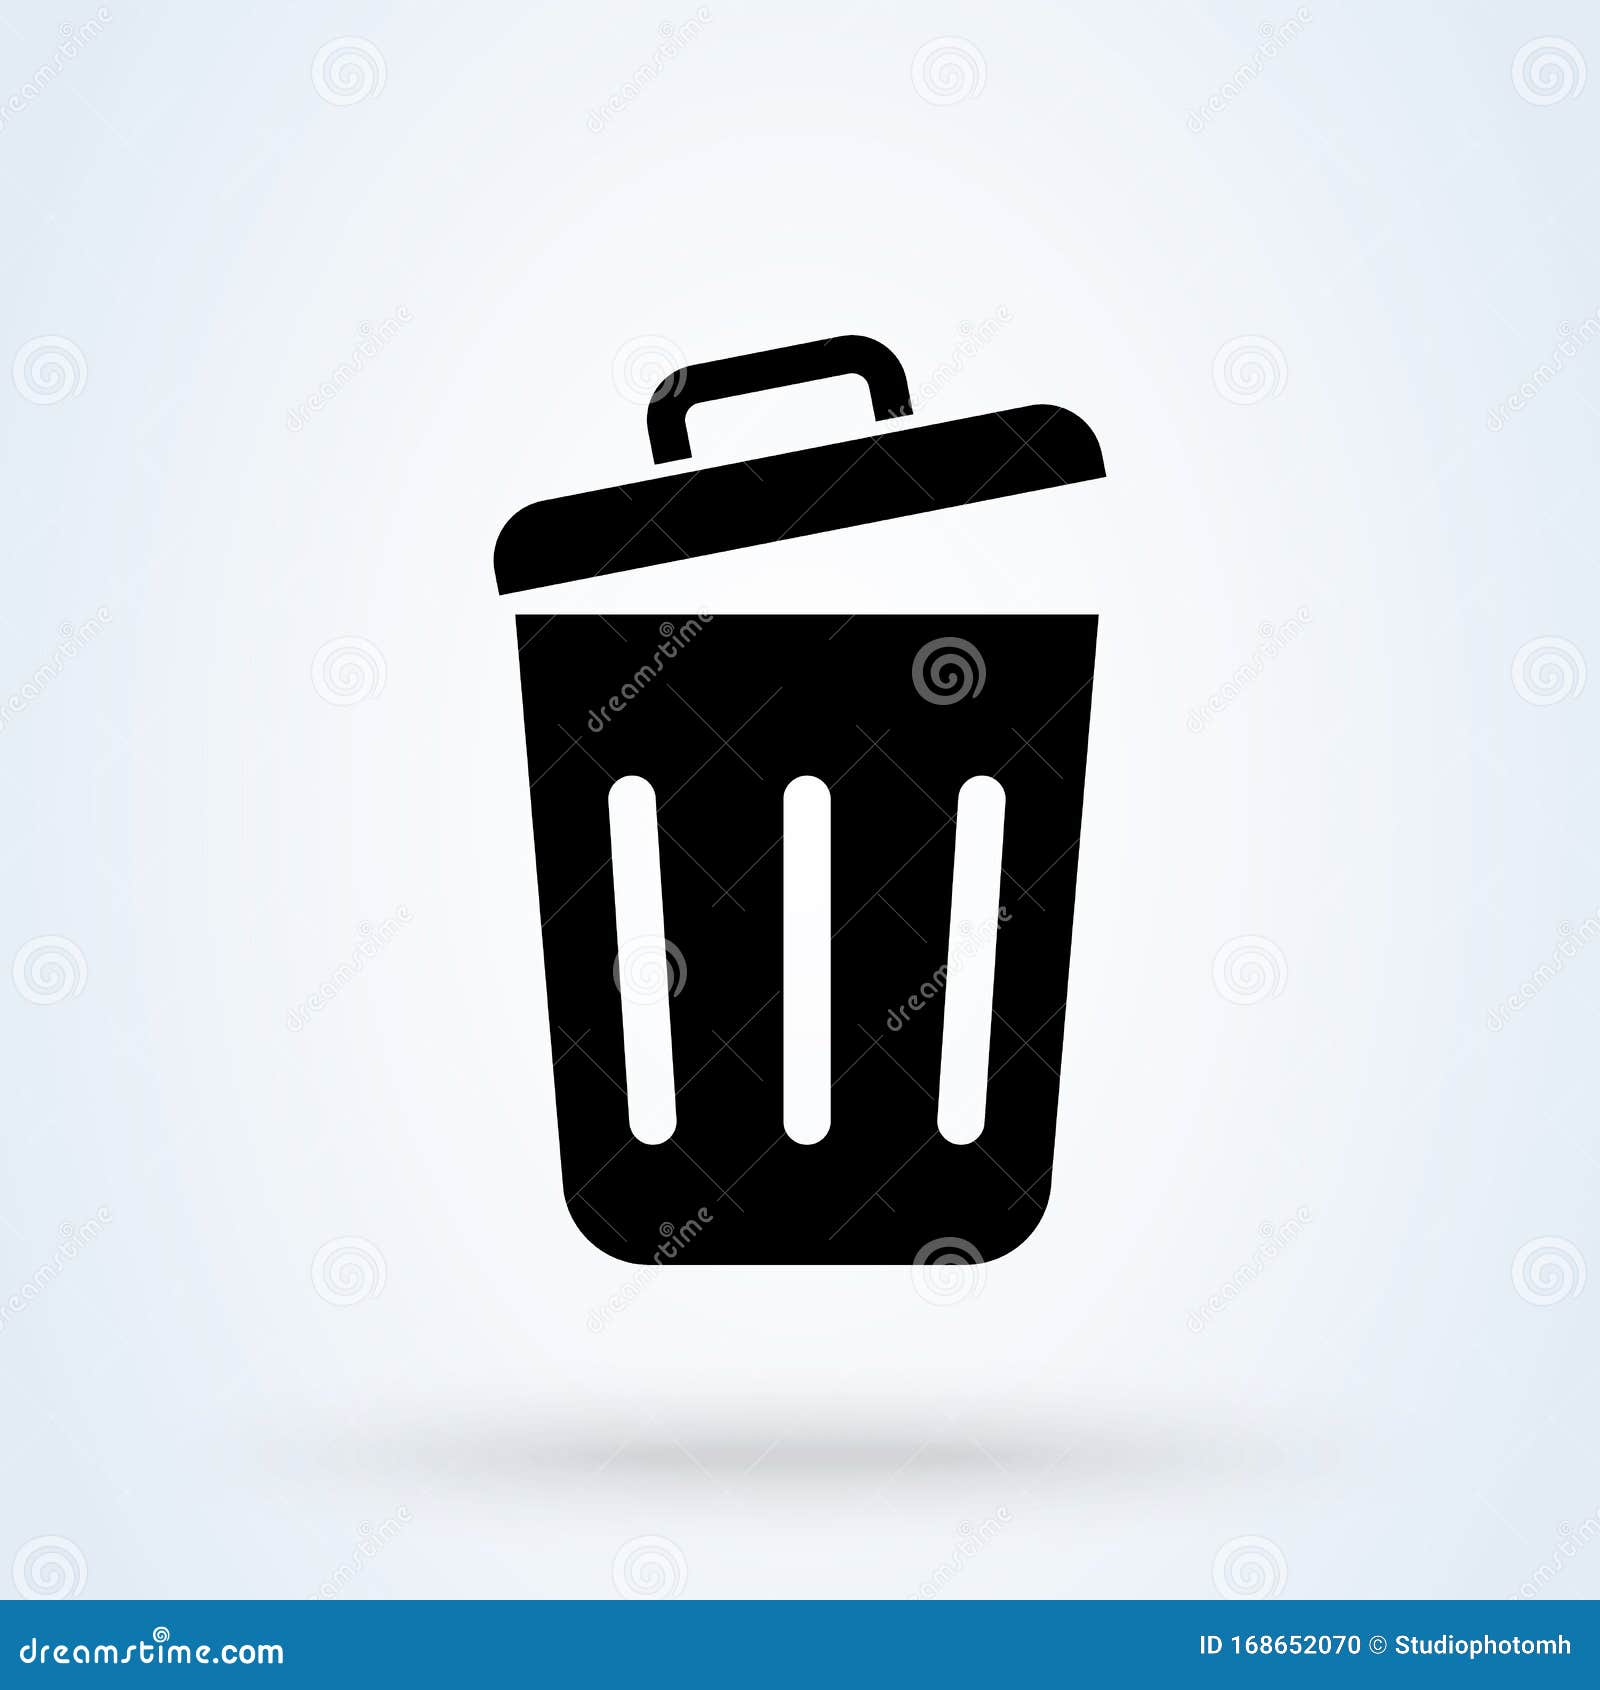 trash can, rubbish bin. simple  modern icon  